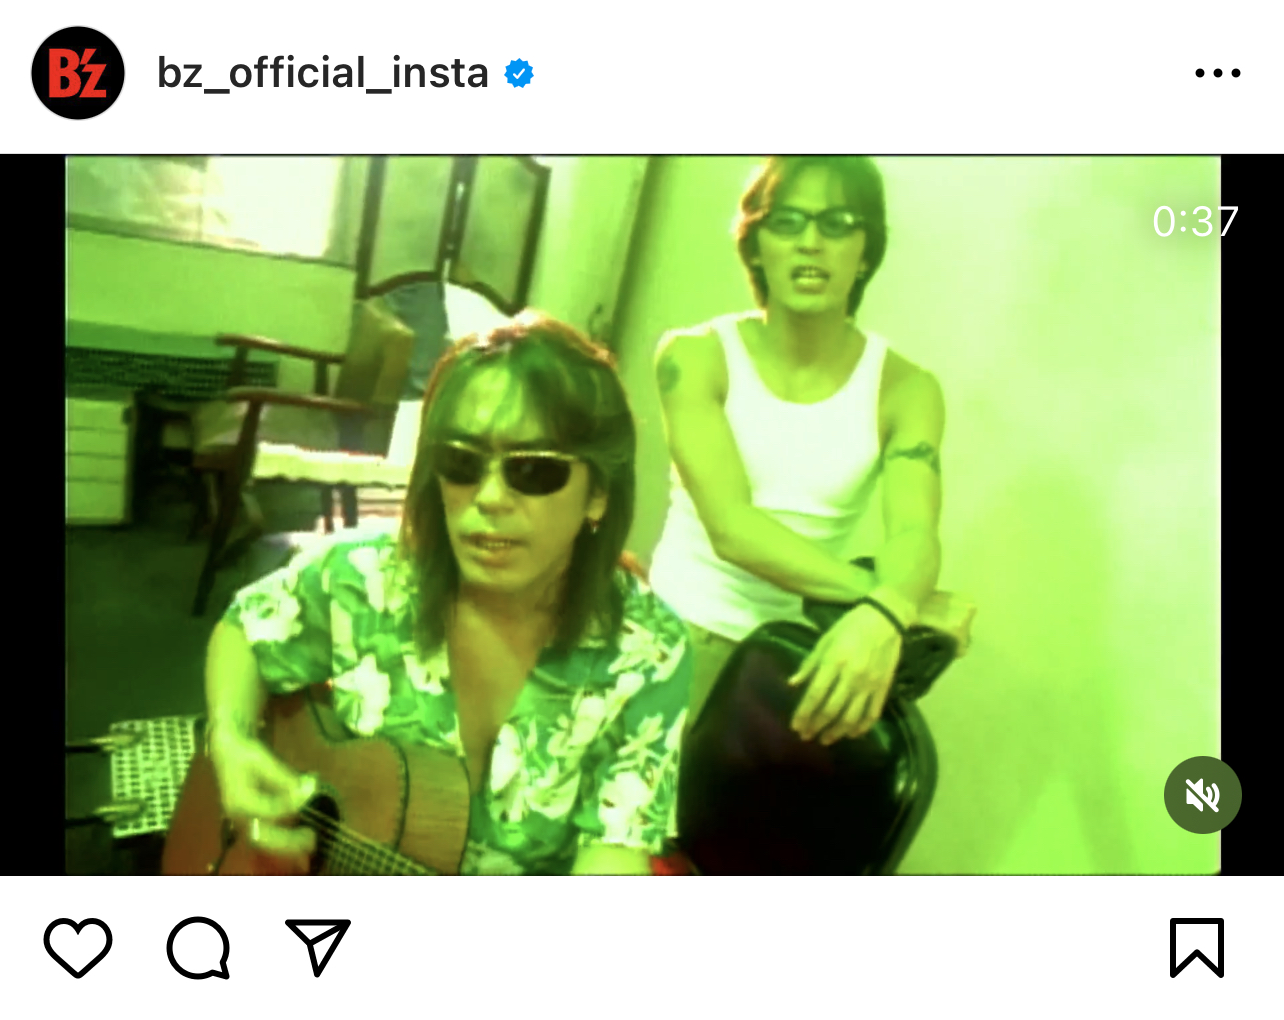 B'z公式Instagramに投稿された「HOME」のミュージック・ビデオ